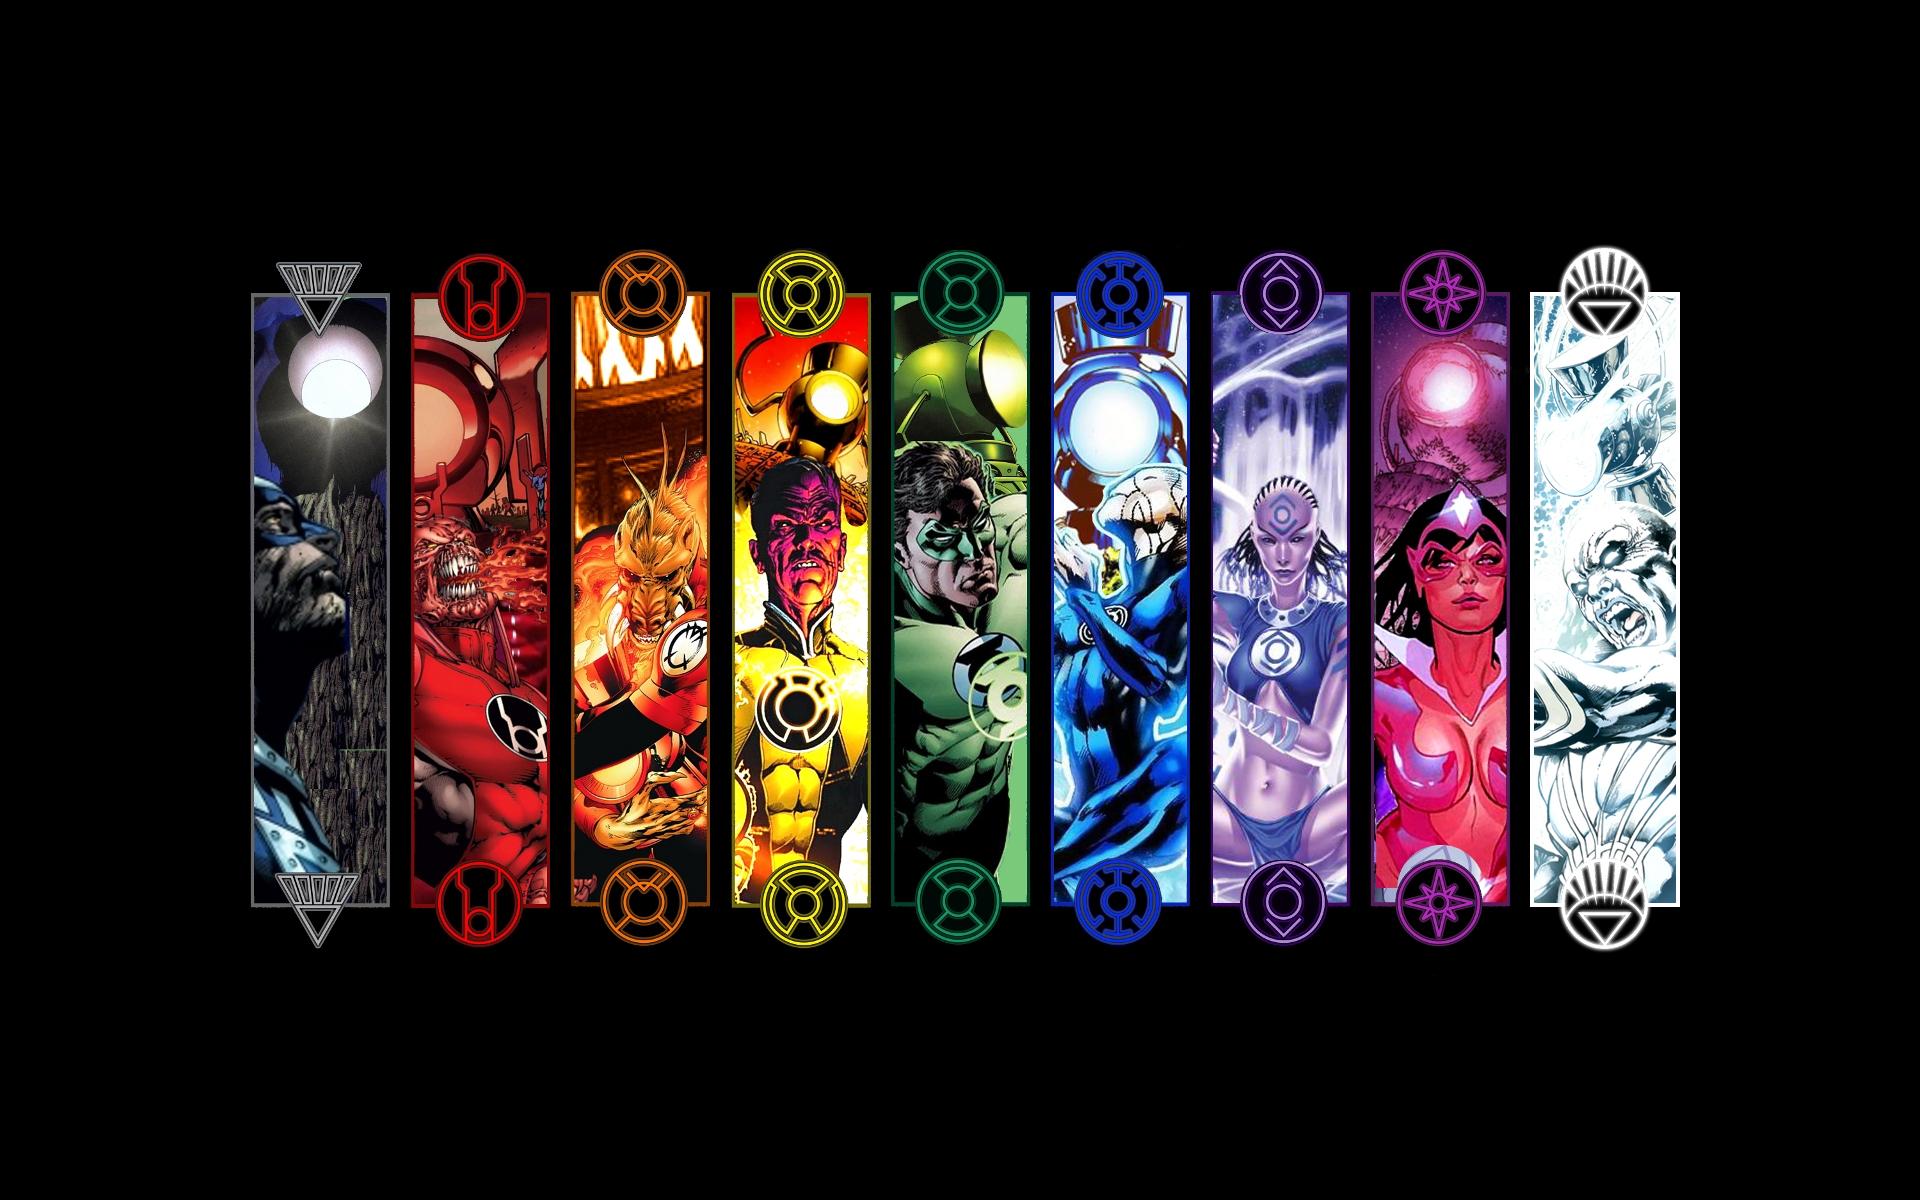 Green Lantern, DC Comics, Sinestro Corps, White Lantern, Hal Jordan, Agent Orange, Atrocitus, Red Lantern Corps, Blue Lantern, Indigo Tribe, Black Lantern Corps, Black Hand, Saint Walker - desktop wallpaper